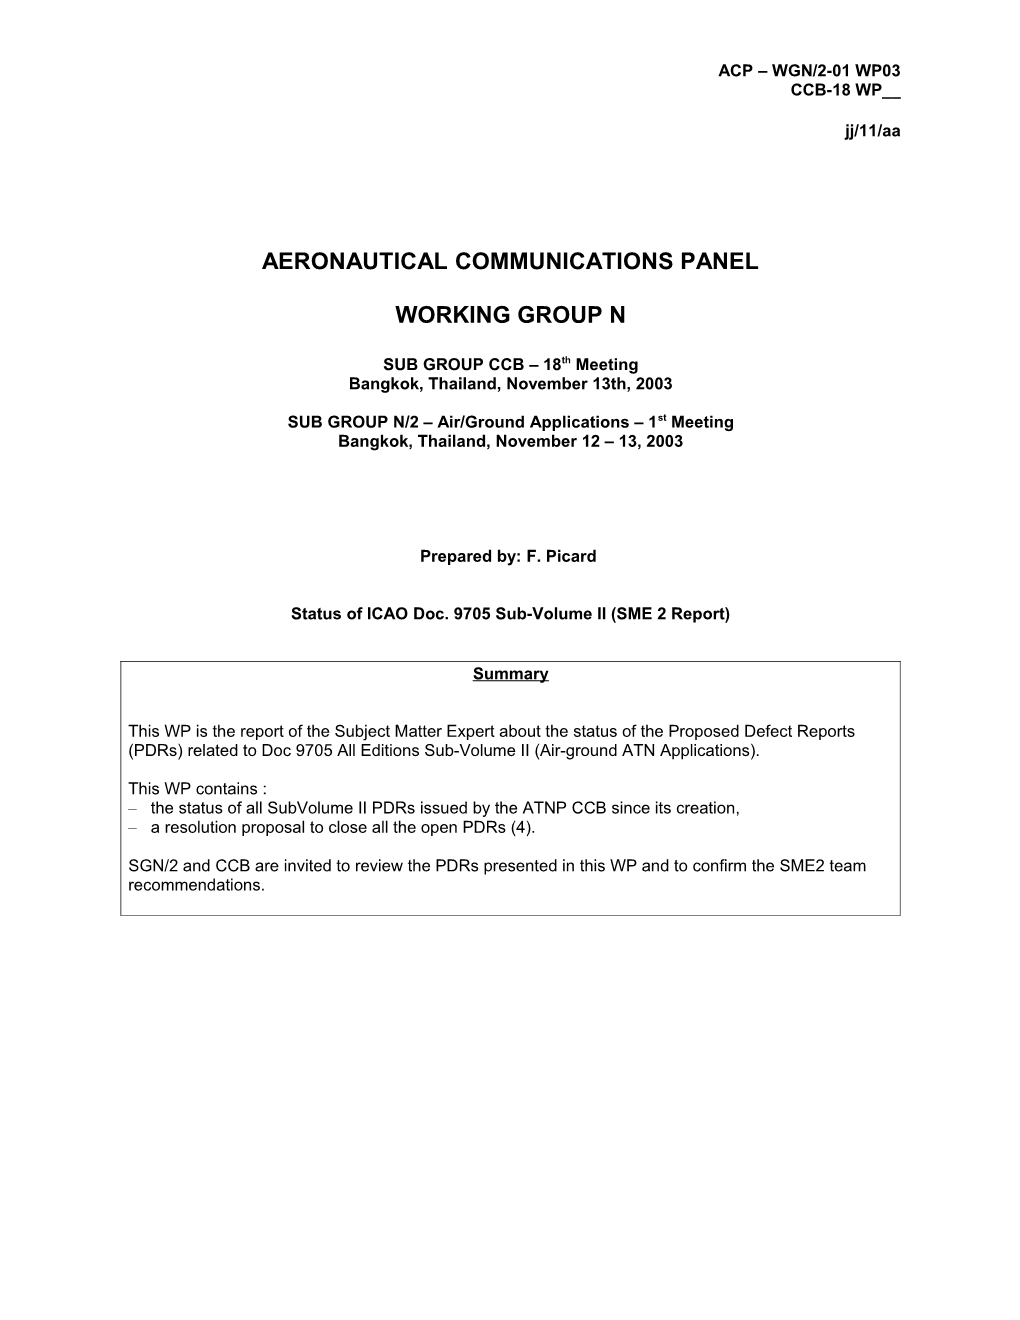 Status of ICAO Doc. 9705 Sub-Volume II (SME 2 Report)